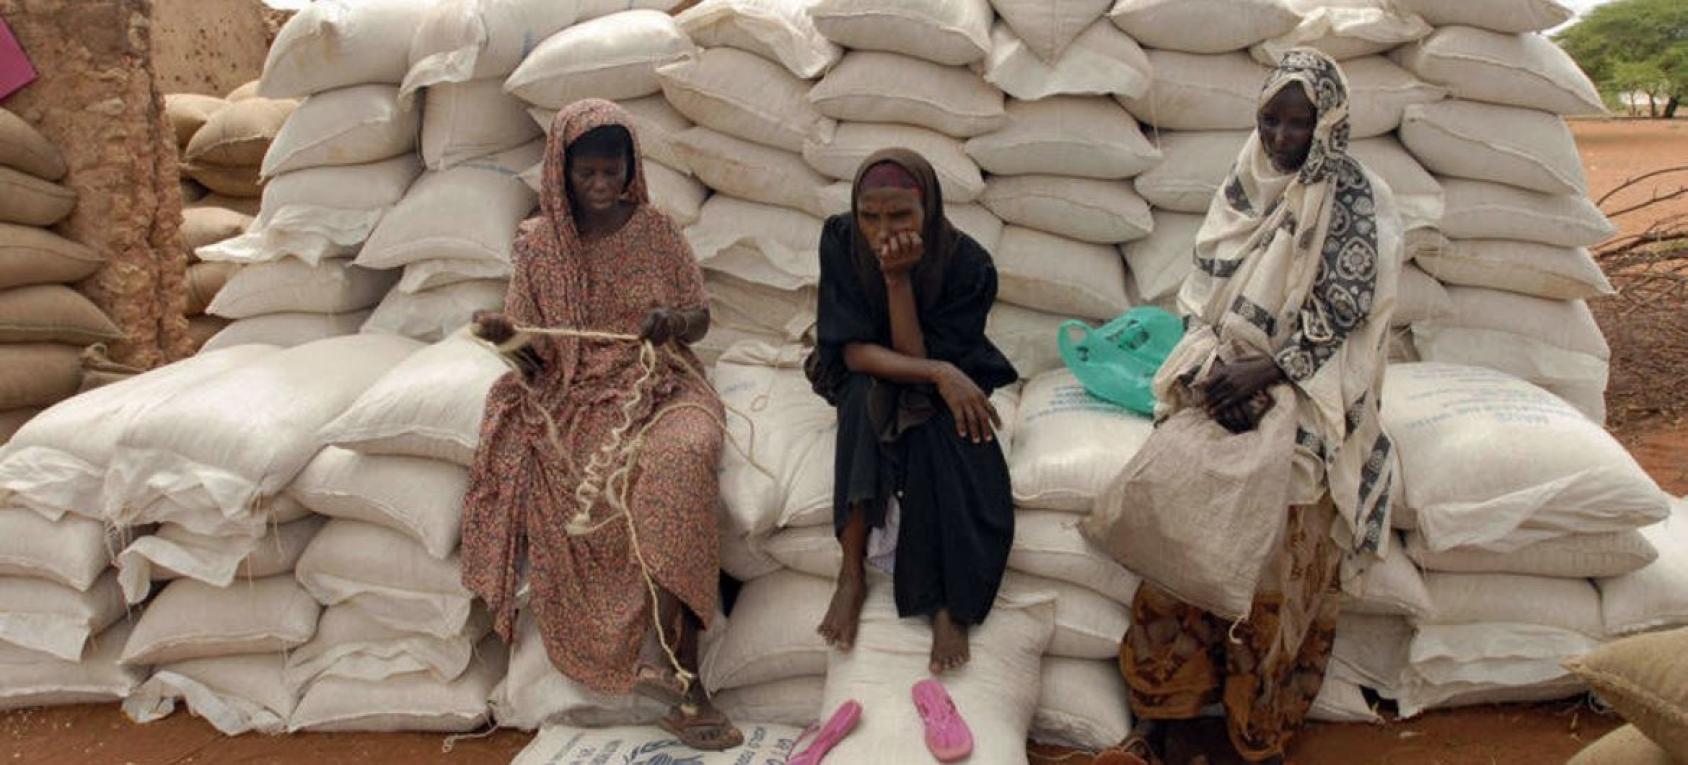 Three women sitting on the sacks of rice.